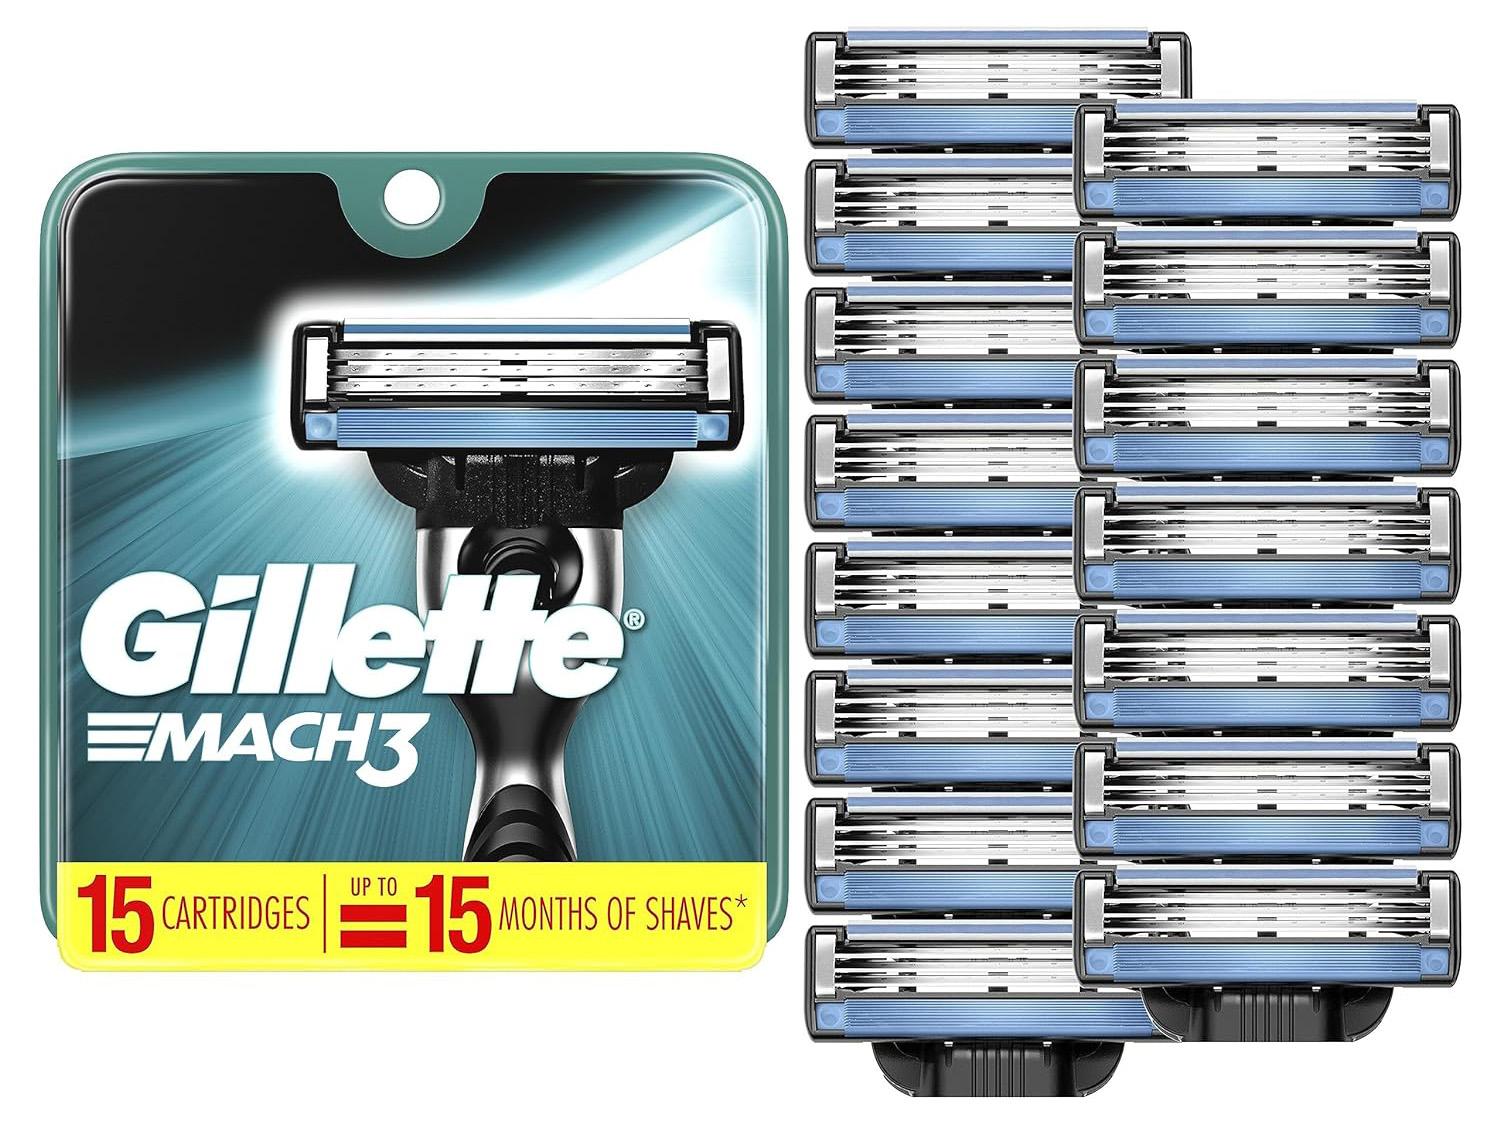 Gillette Mach3 Razor Refills 15 Pack for $20.38 Shipped